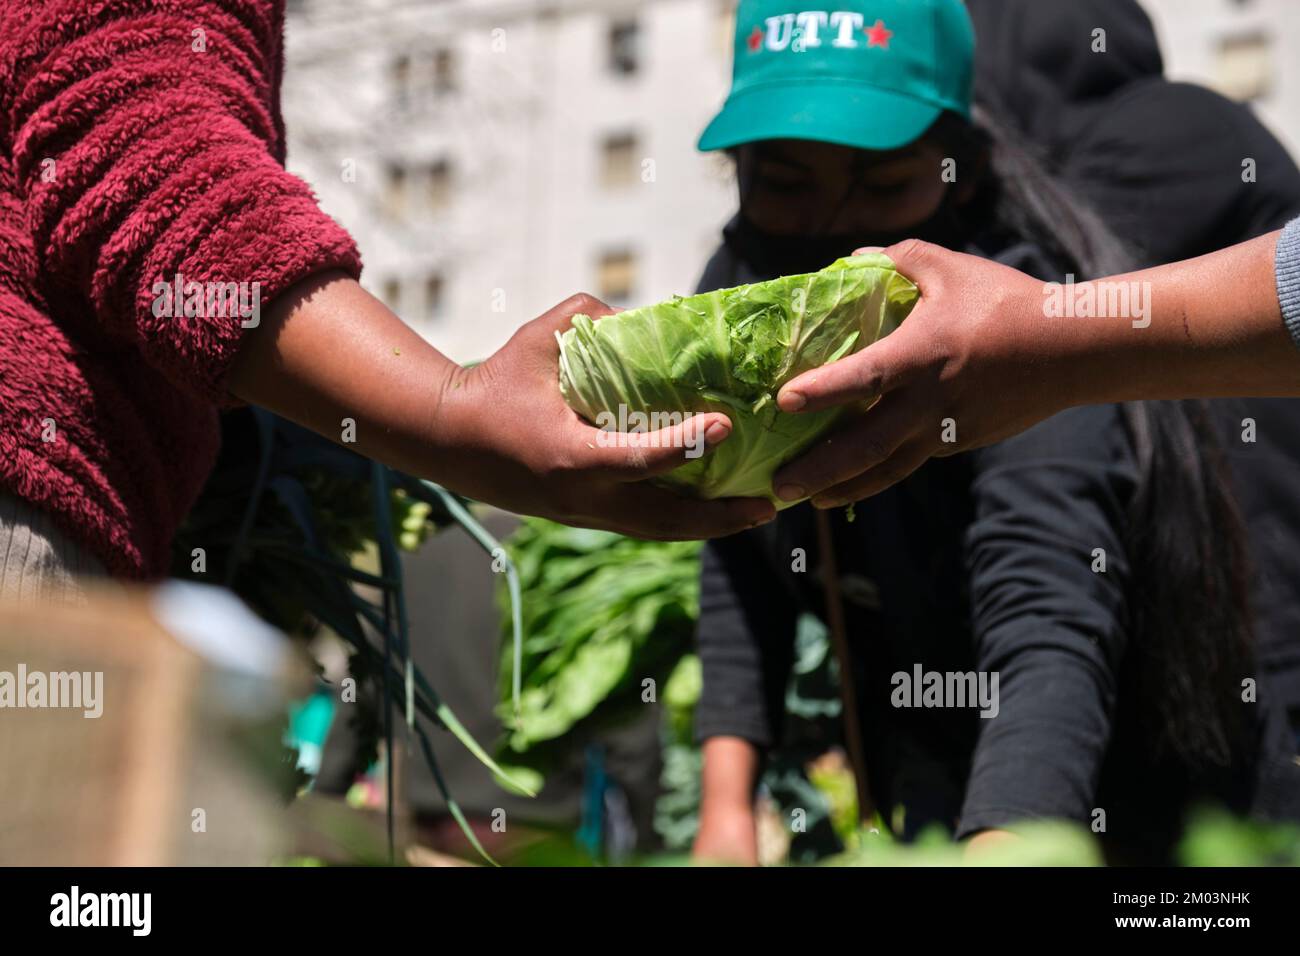 Buenos Aires, Argentina, 21 sept, 2021: UTT, Union de Trabajadores de la Tierra, Land Workers Union, distribute free organic food, fruits and vegetabl Stock Photo